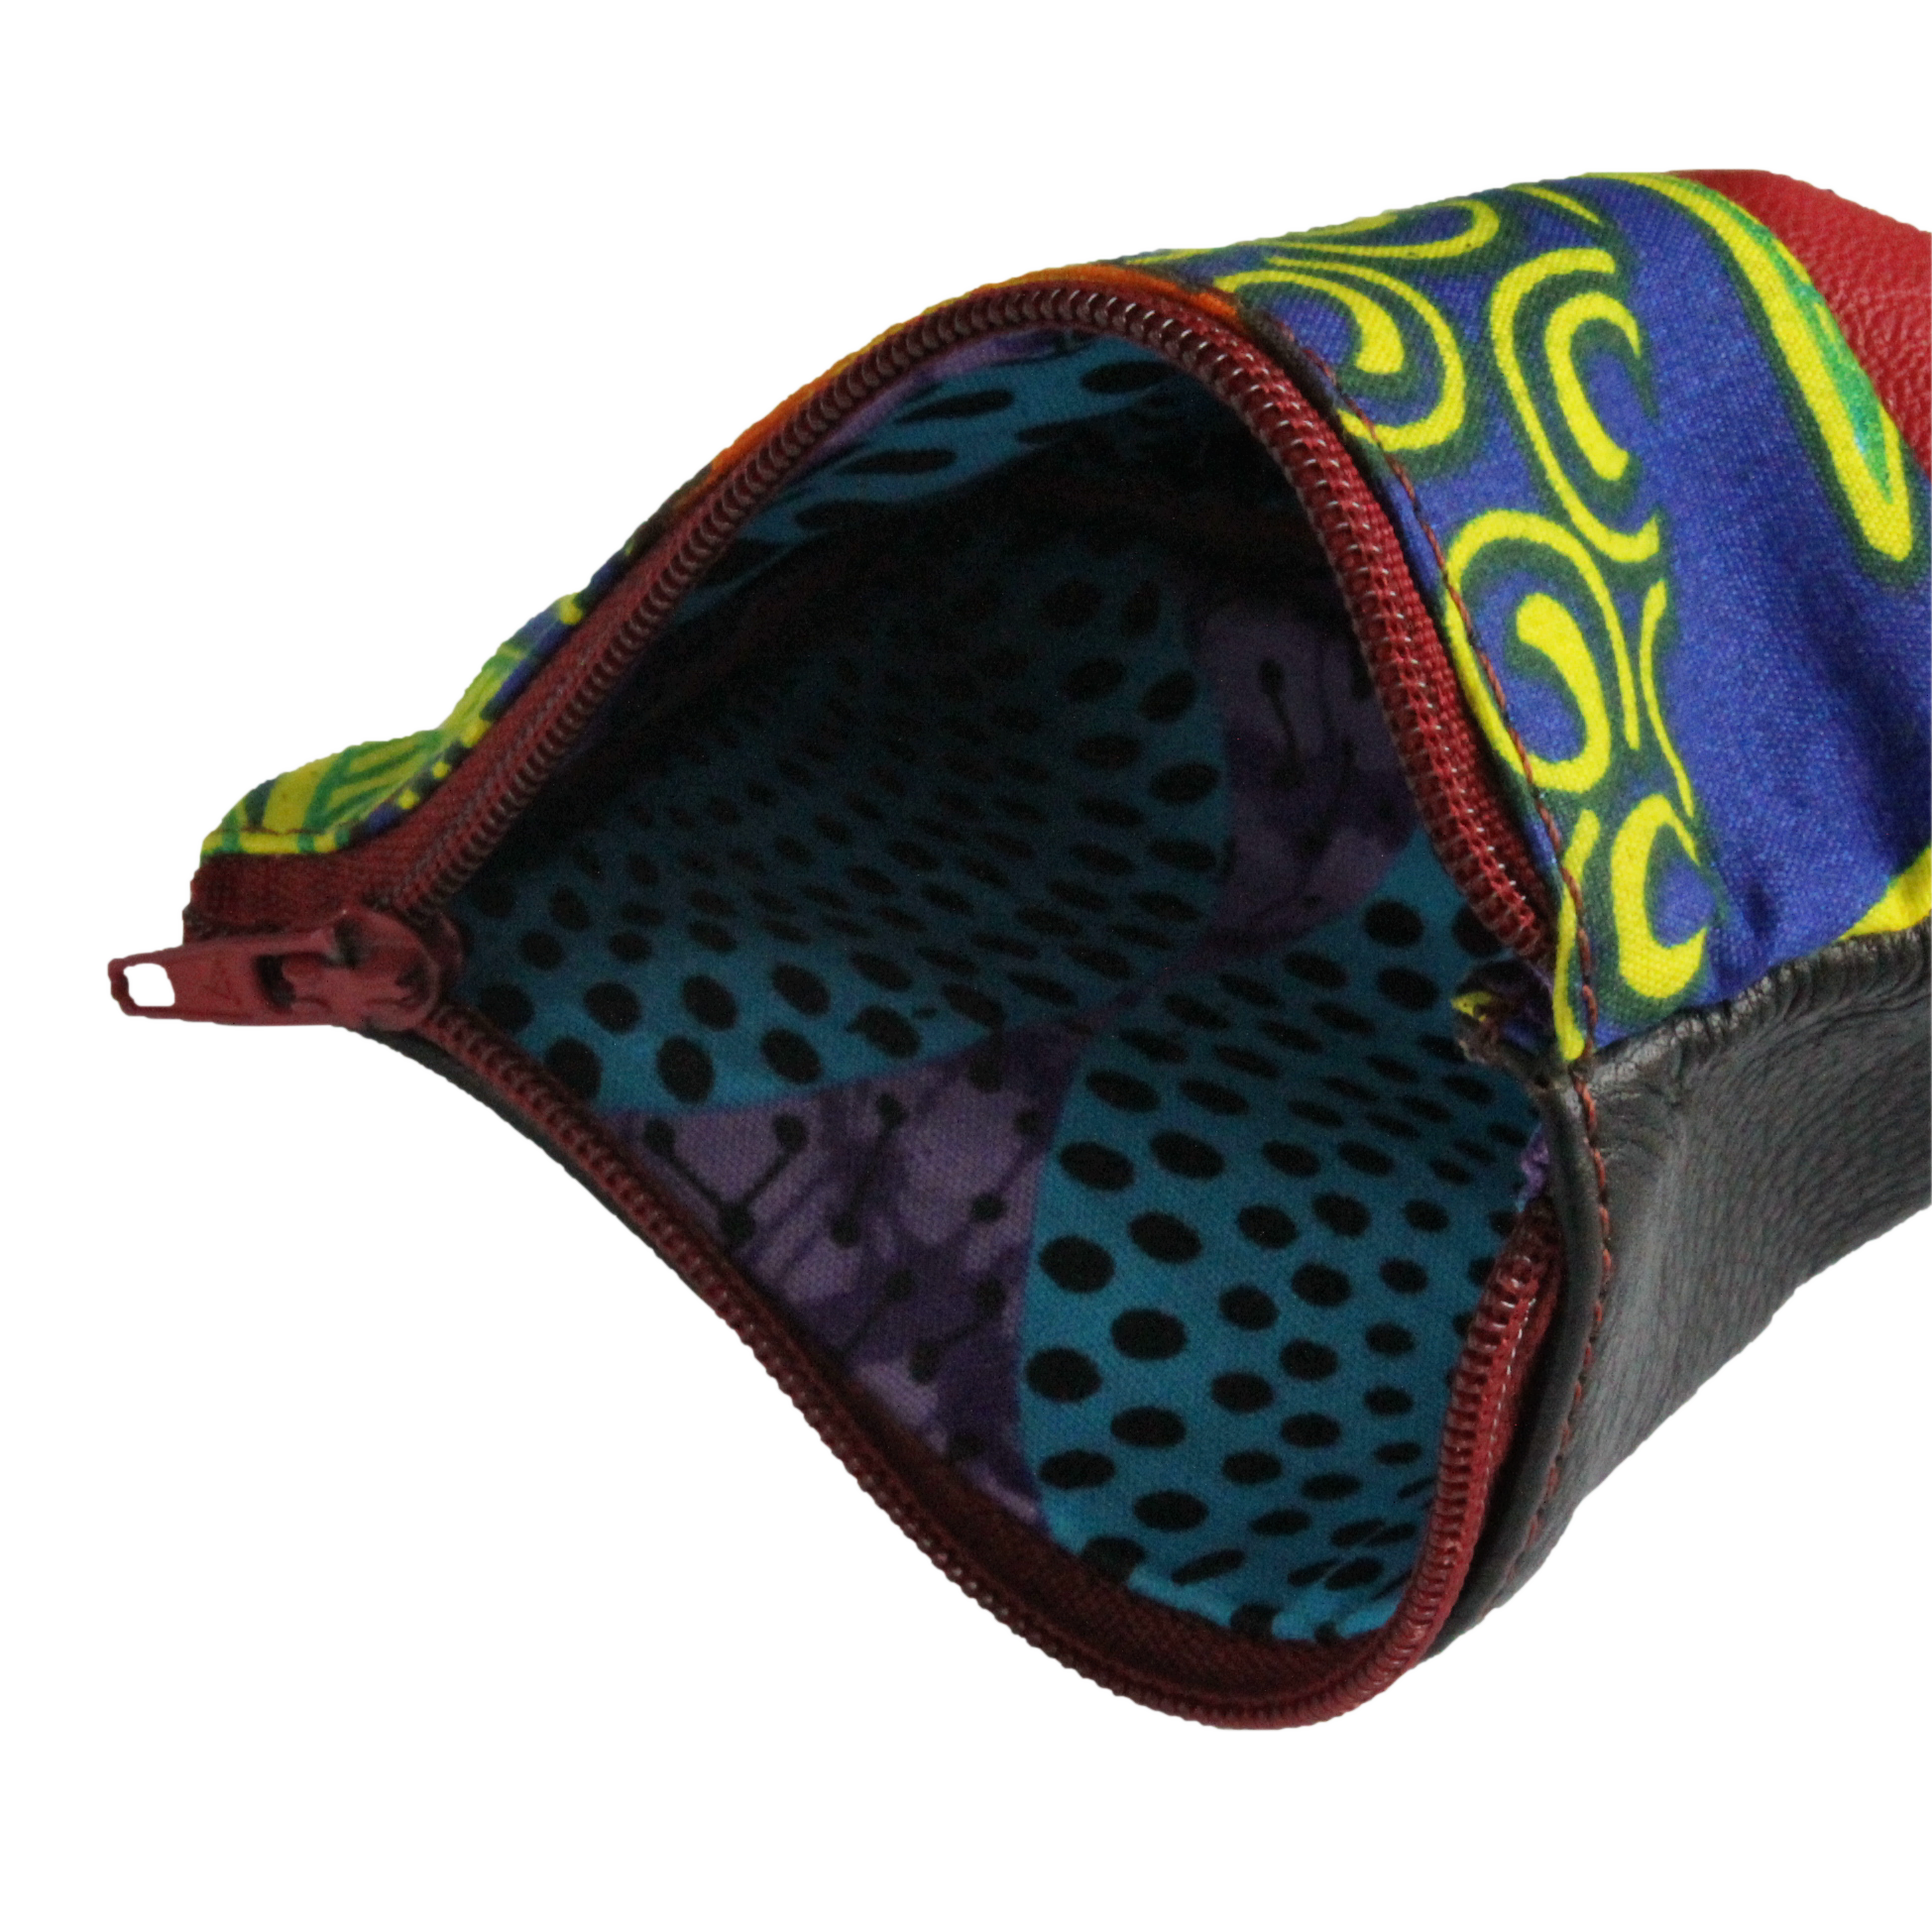 Handmade African coin purse, upcycled leather, African print, Kitenge fashion, Ankara fashion, blue lining